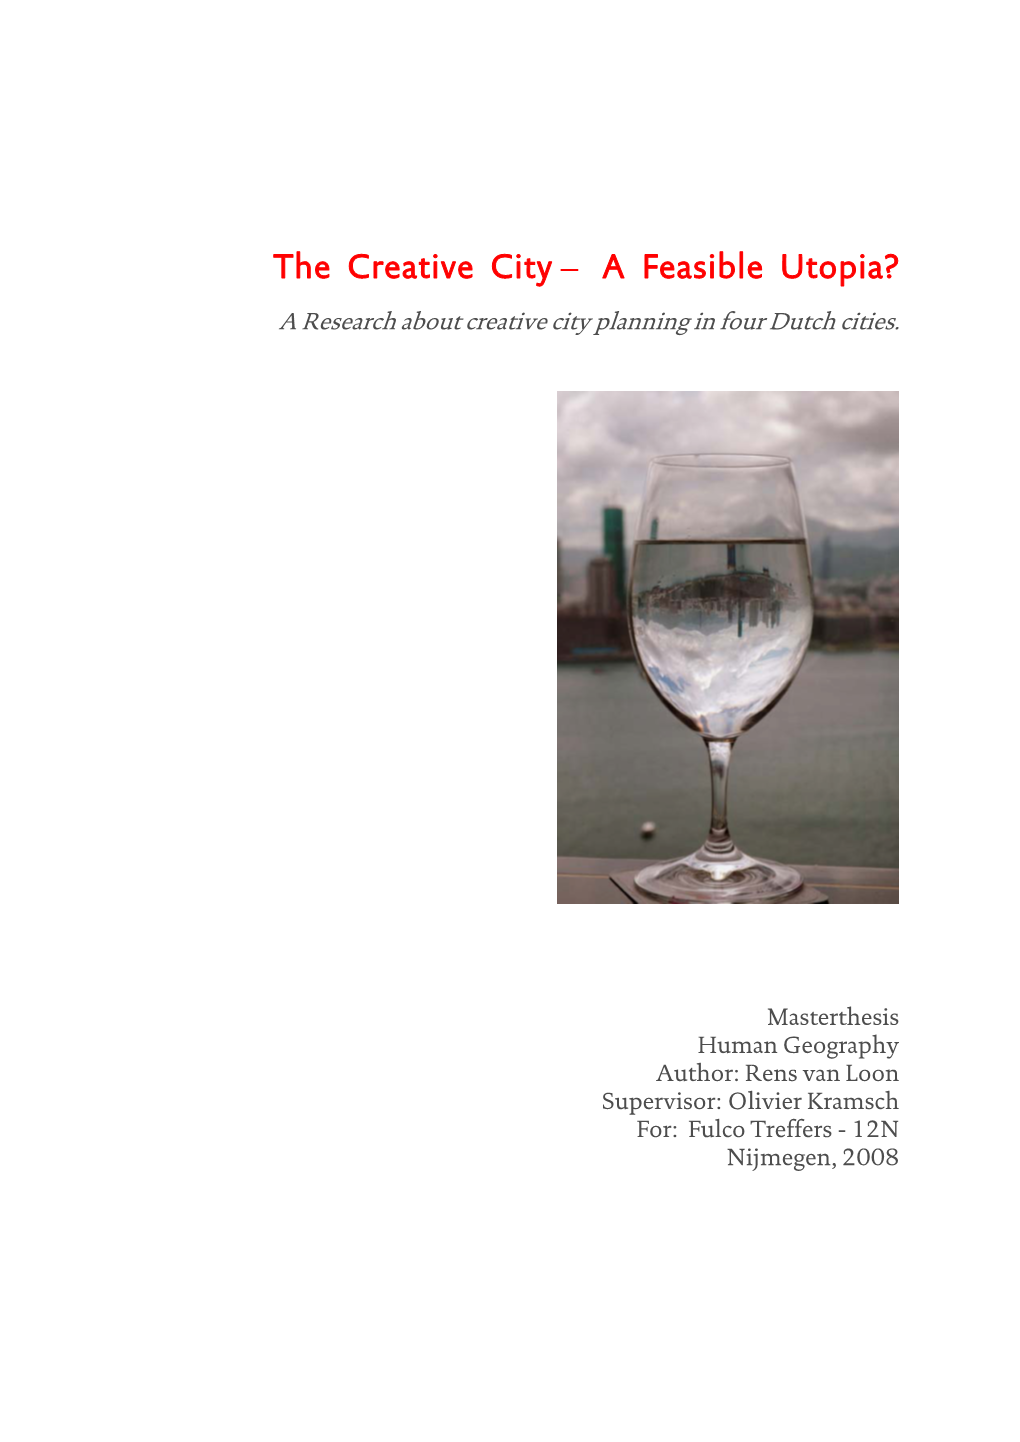 The Creative City – a Feasible Utopia?